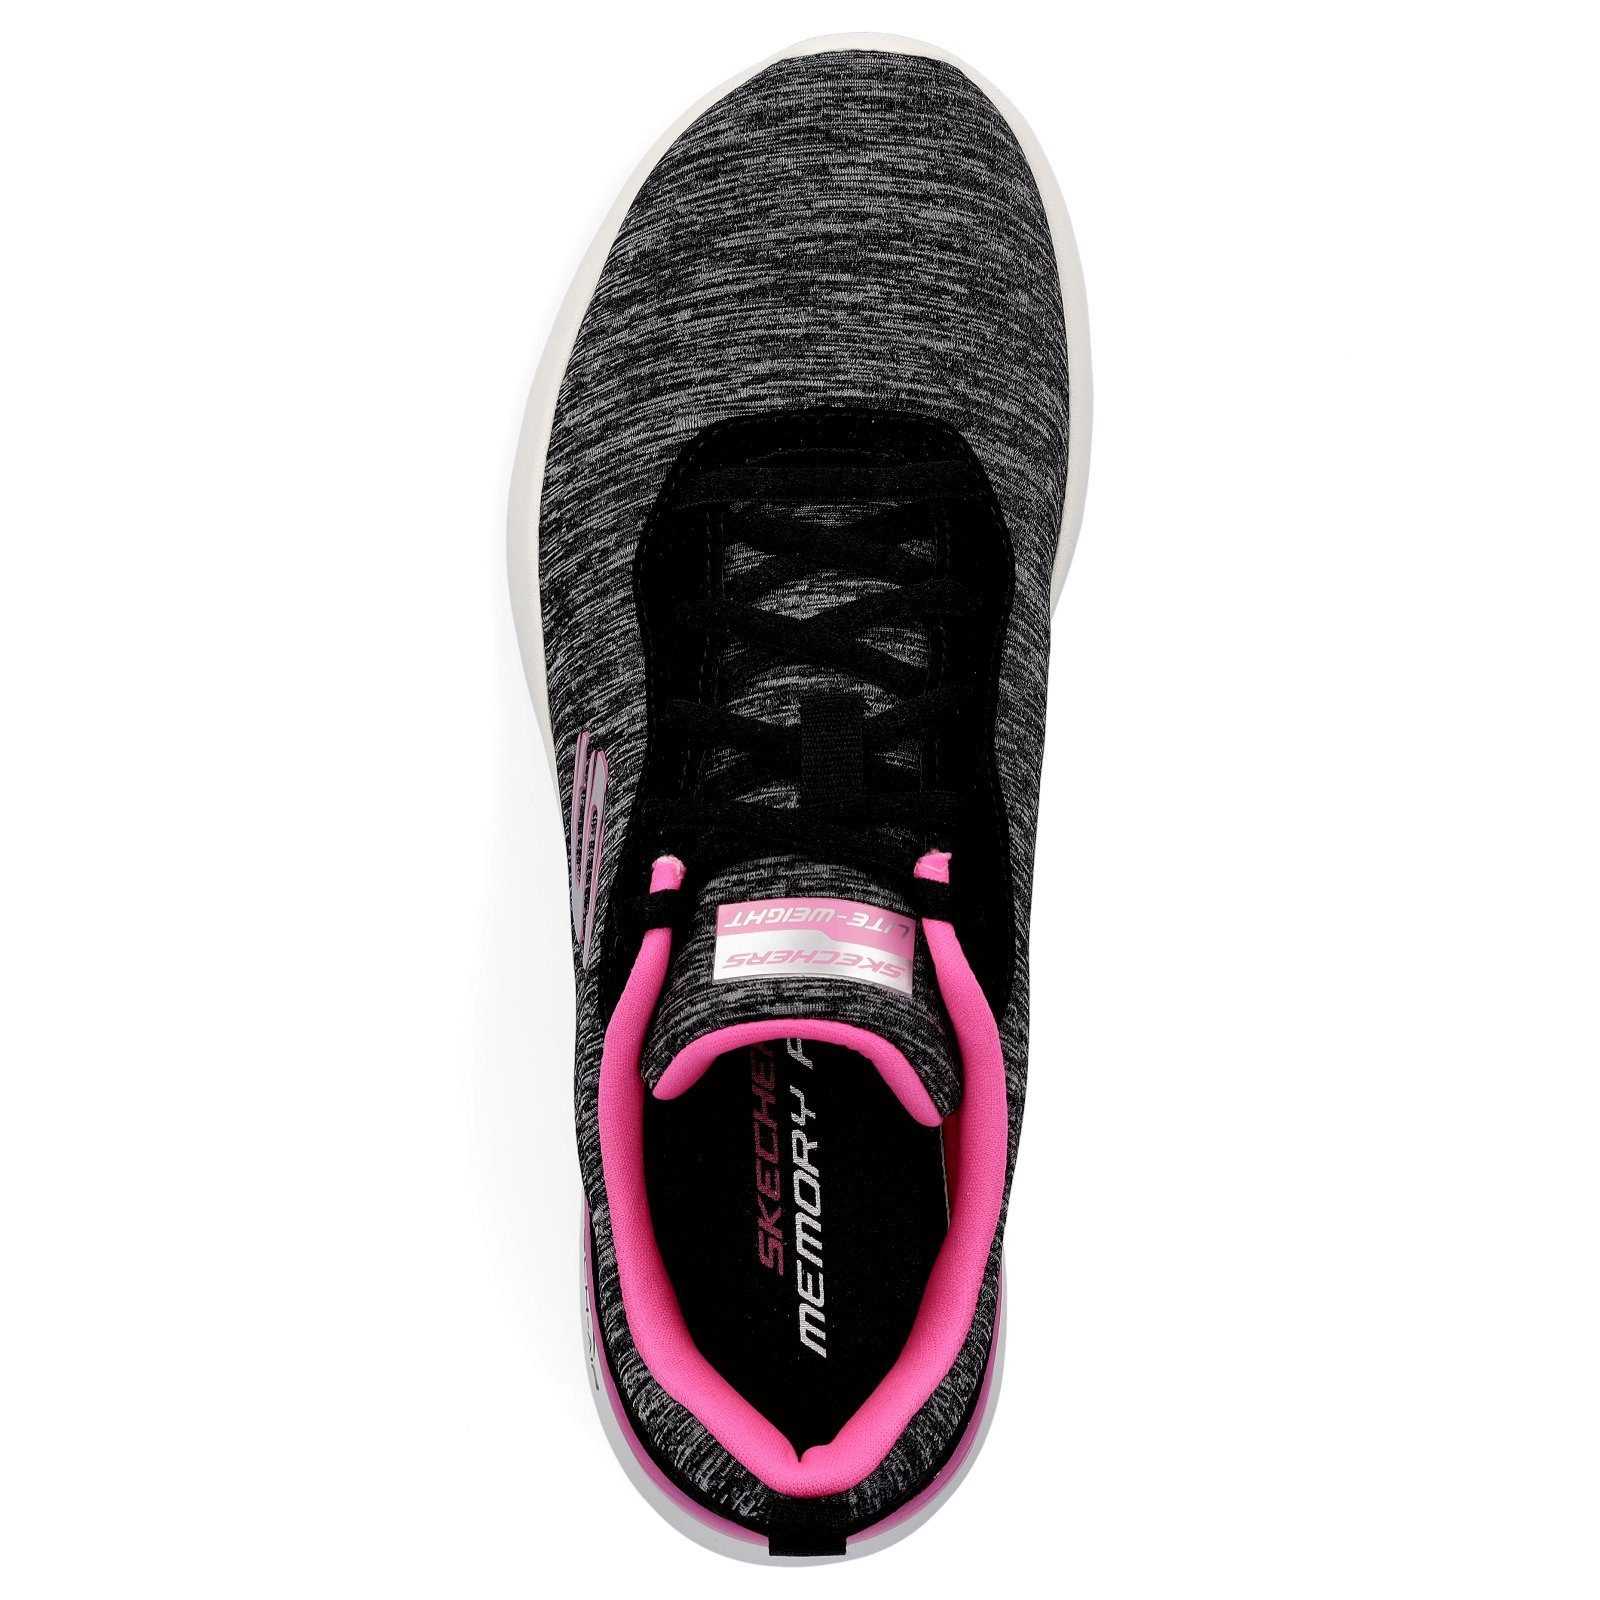 Damen Skechers pink schwarz Skechers Paradise Sneaker Sneaker black/hot Waves pink